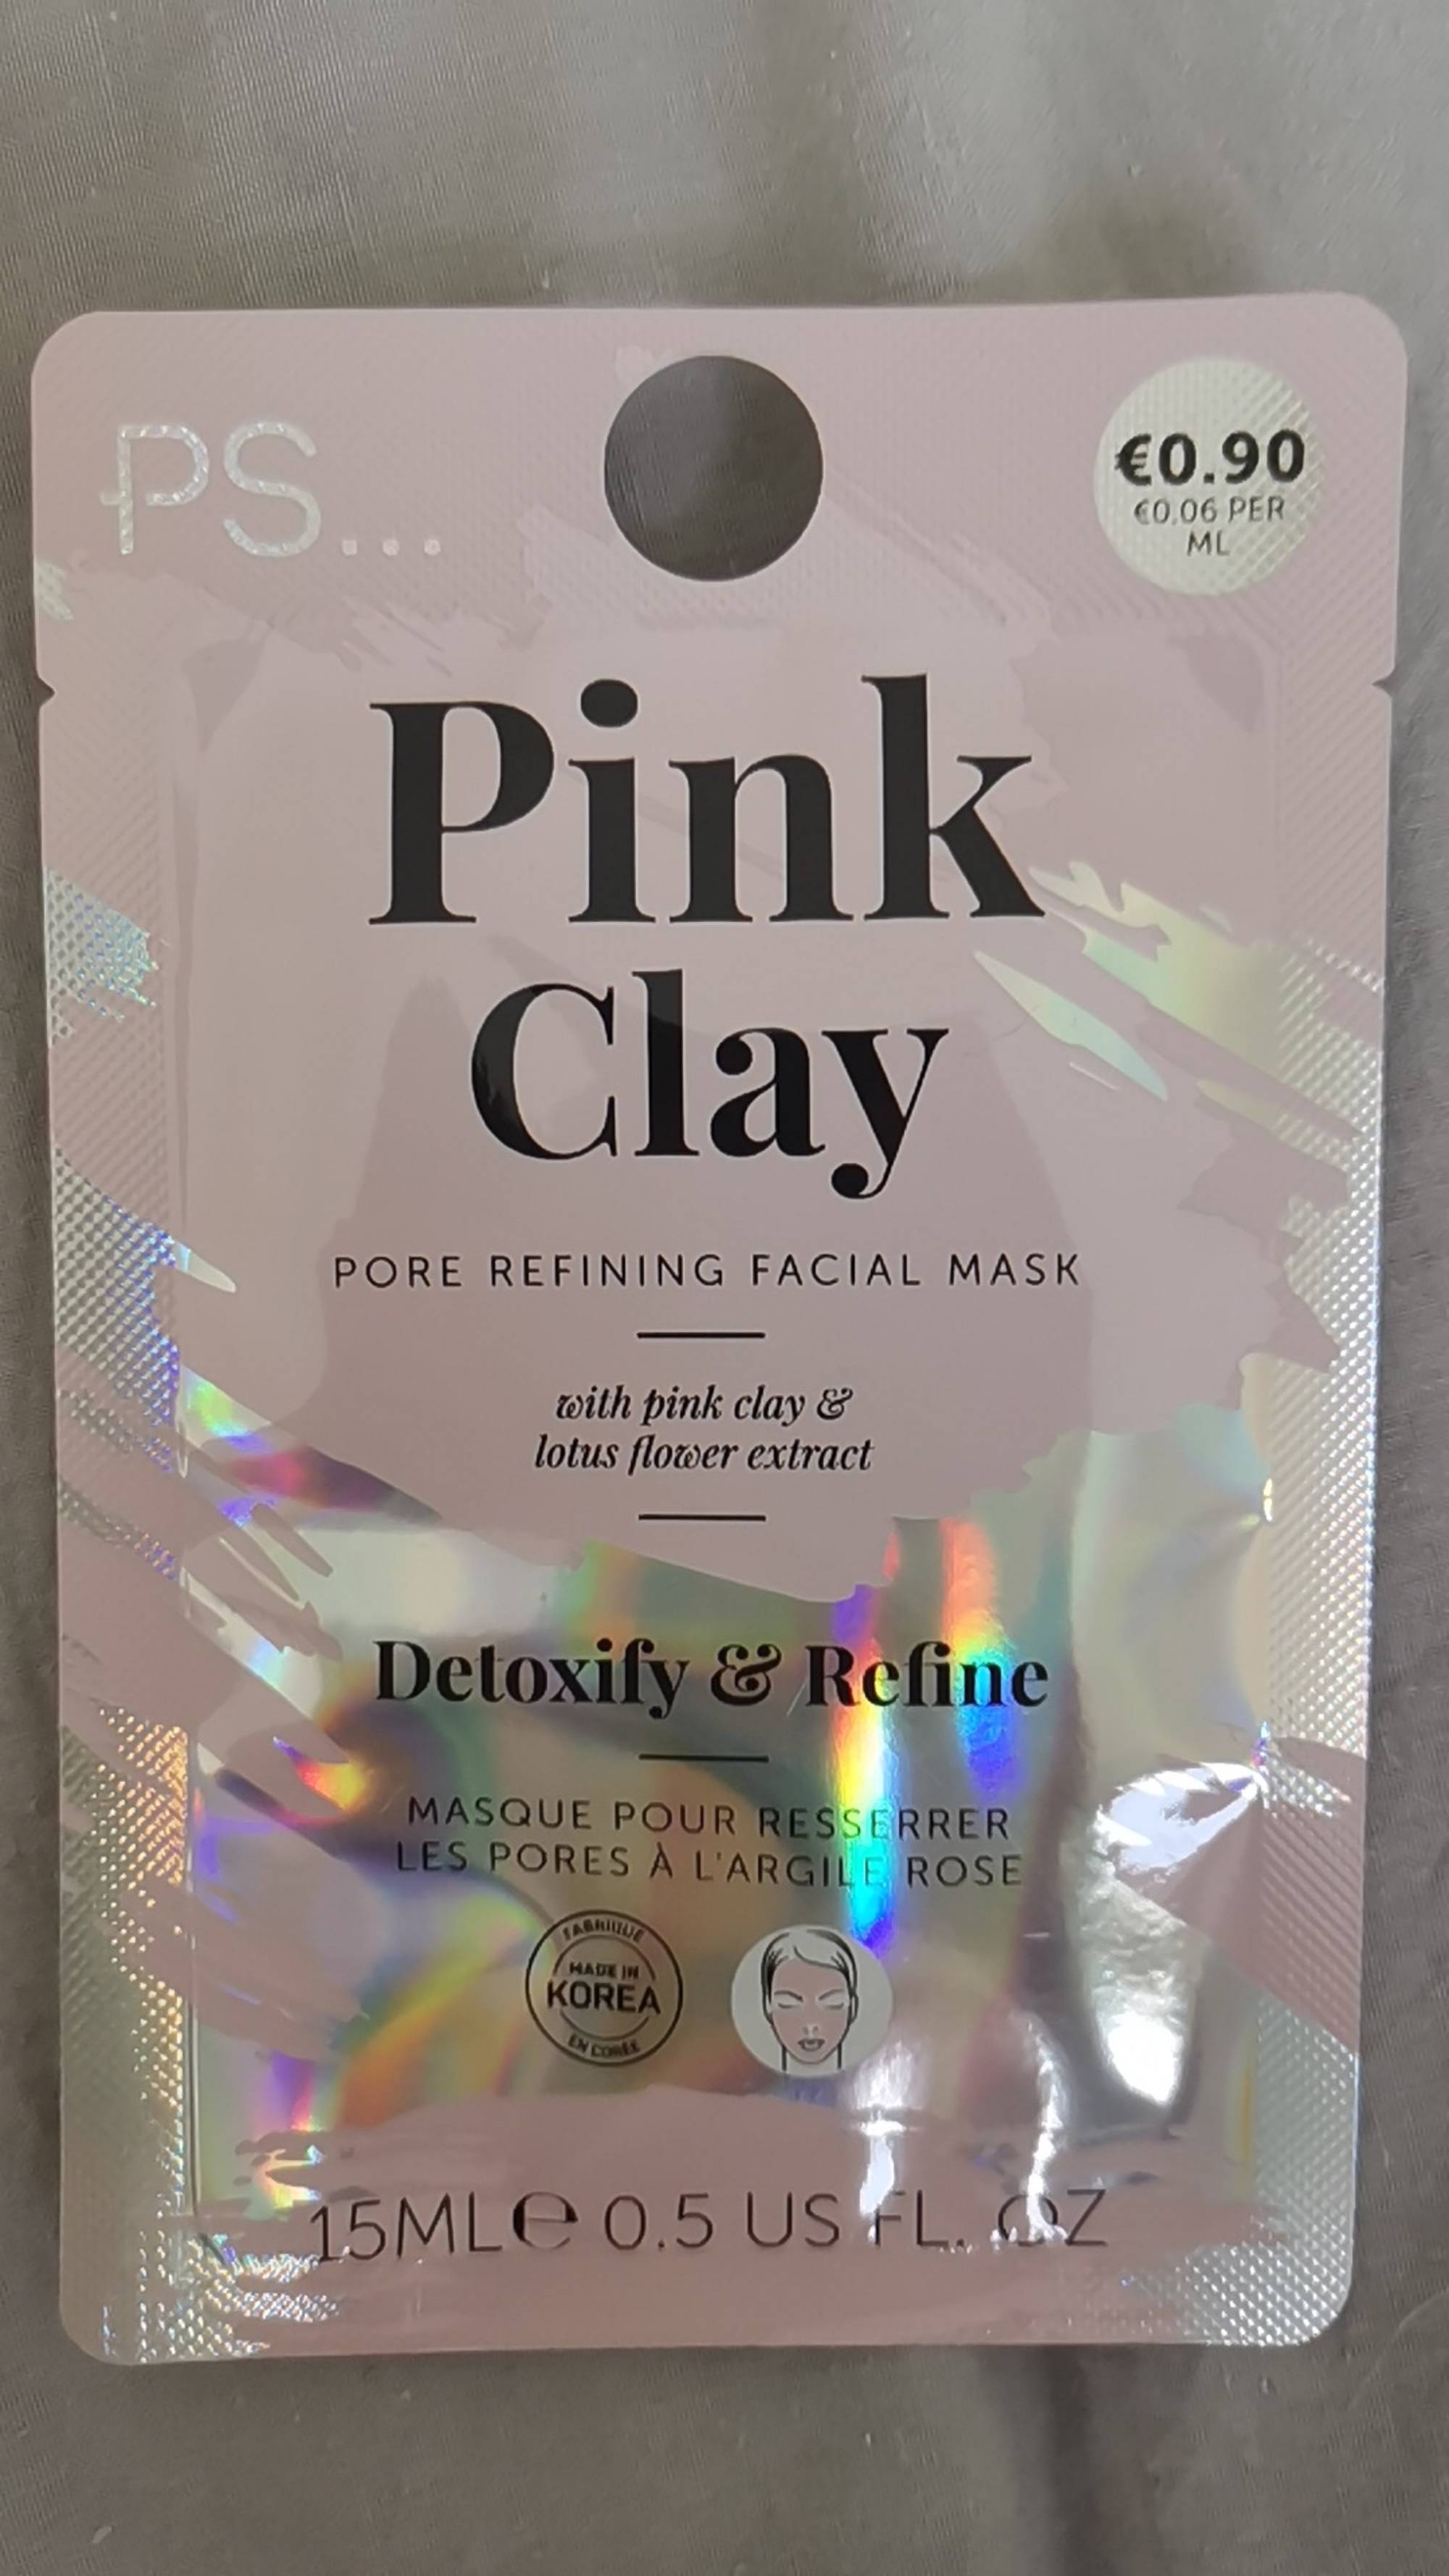 PRIMARK - Pink Clay - Masque pour resserrer les pores à l'argile rose